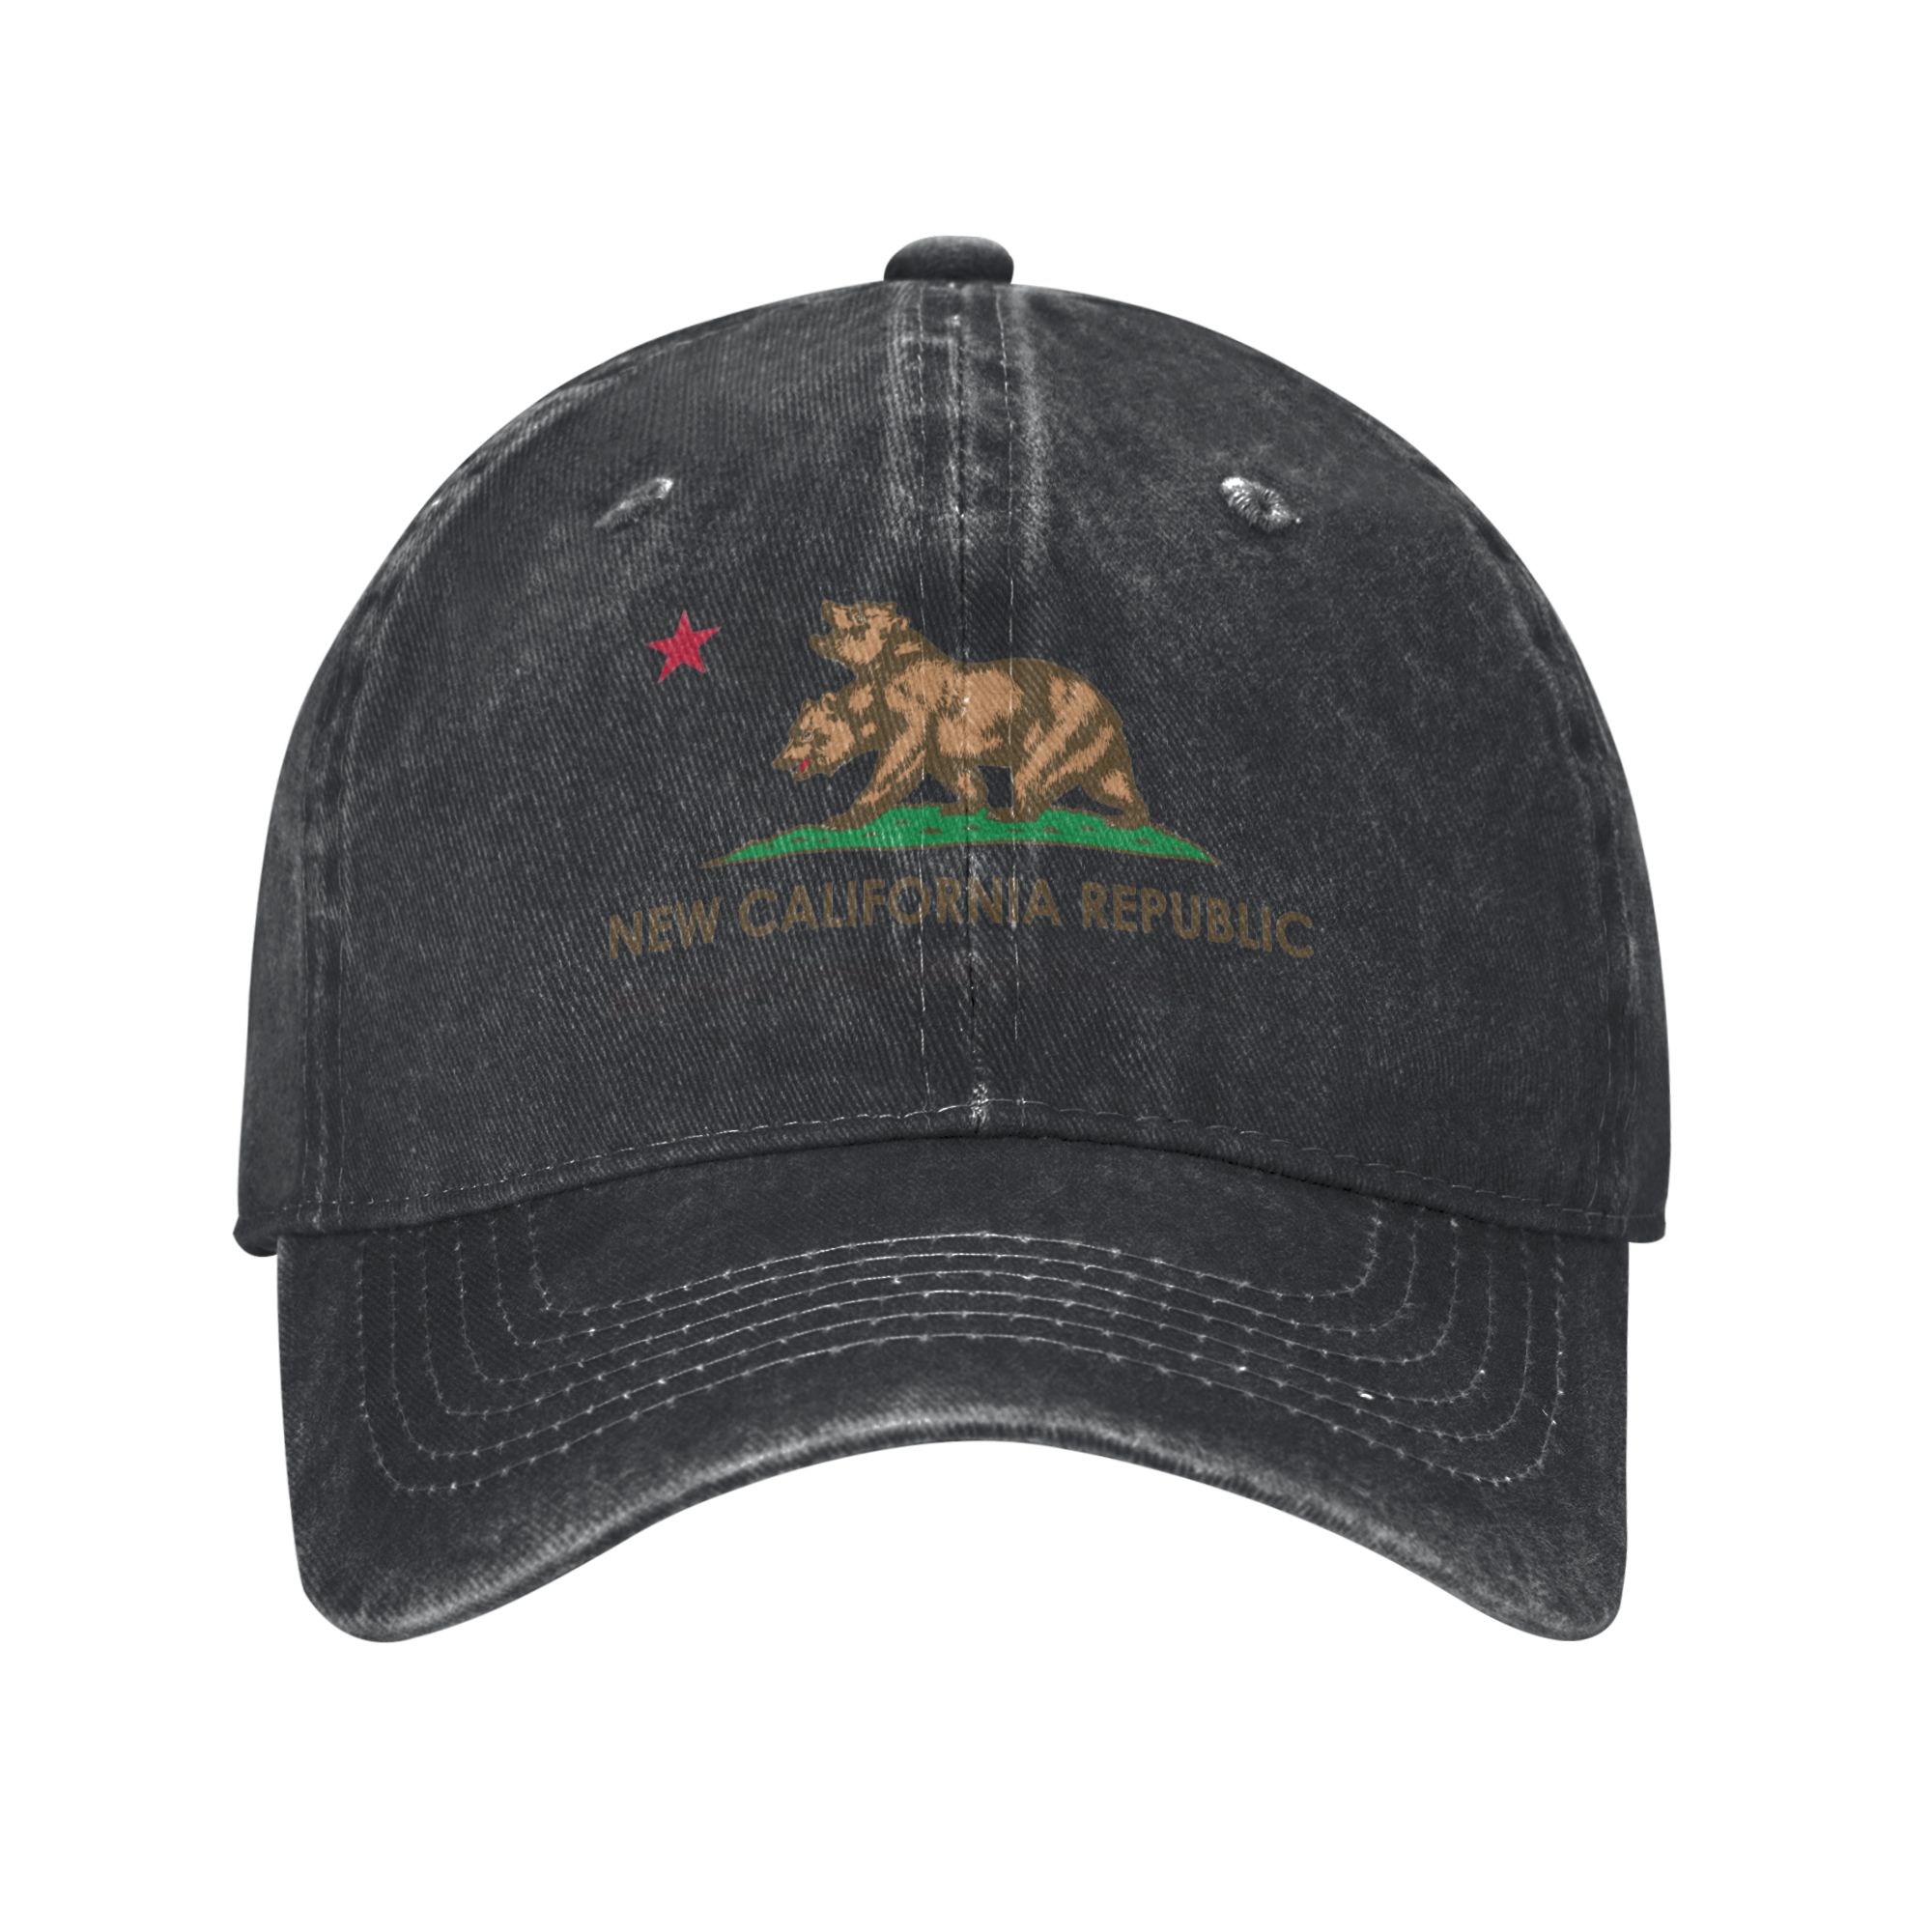 New California Republic Denim Baseball Cap Fallout NCR Cap - Washed Cap